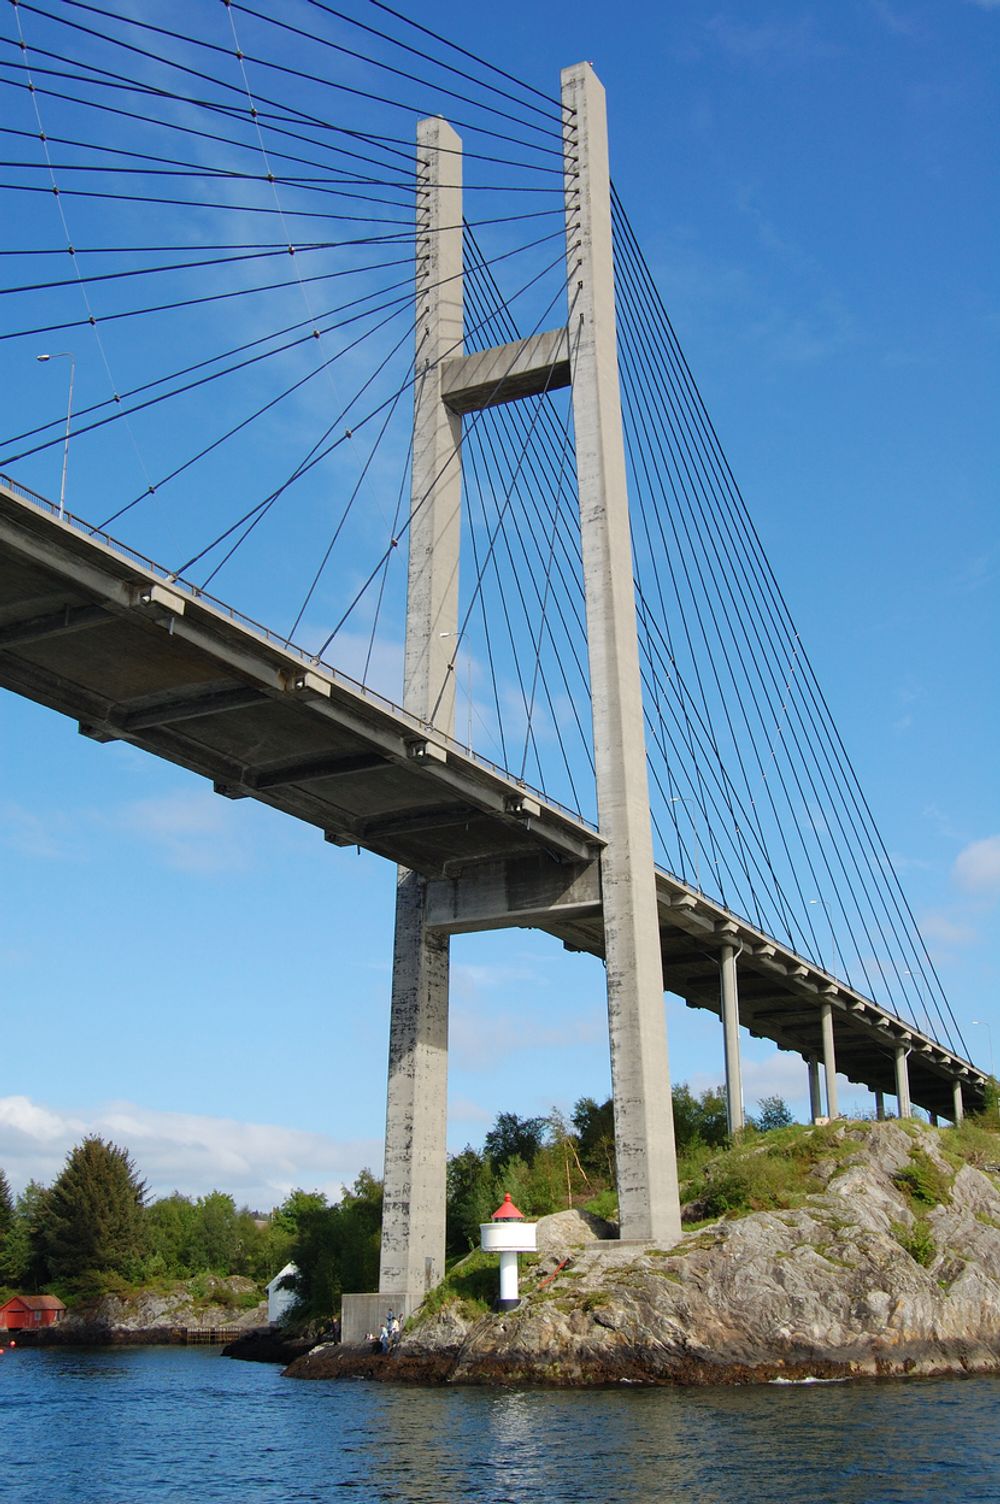 KANDIDAT 6: Nordhordlandsbrua går over Salhusfjorden og forbinder Flatøy i Meland kommune med fastlandet ved Hordvik nord for sentrum i Bergen kommune. Den er Norges nest lengste bro med sine 1614 meter. Broen er en kombinasjon av en skråkabel- og en flytebro, og ble bygget i 1994.